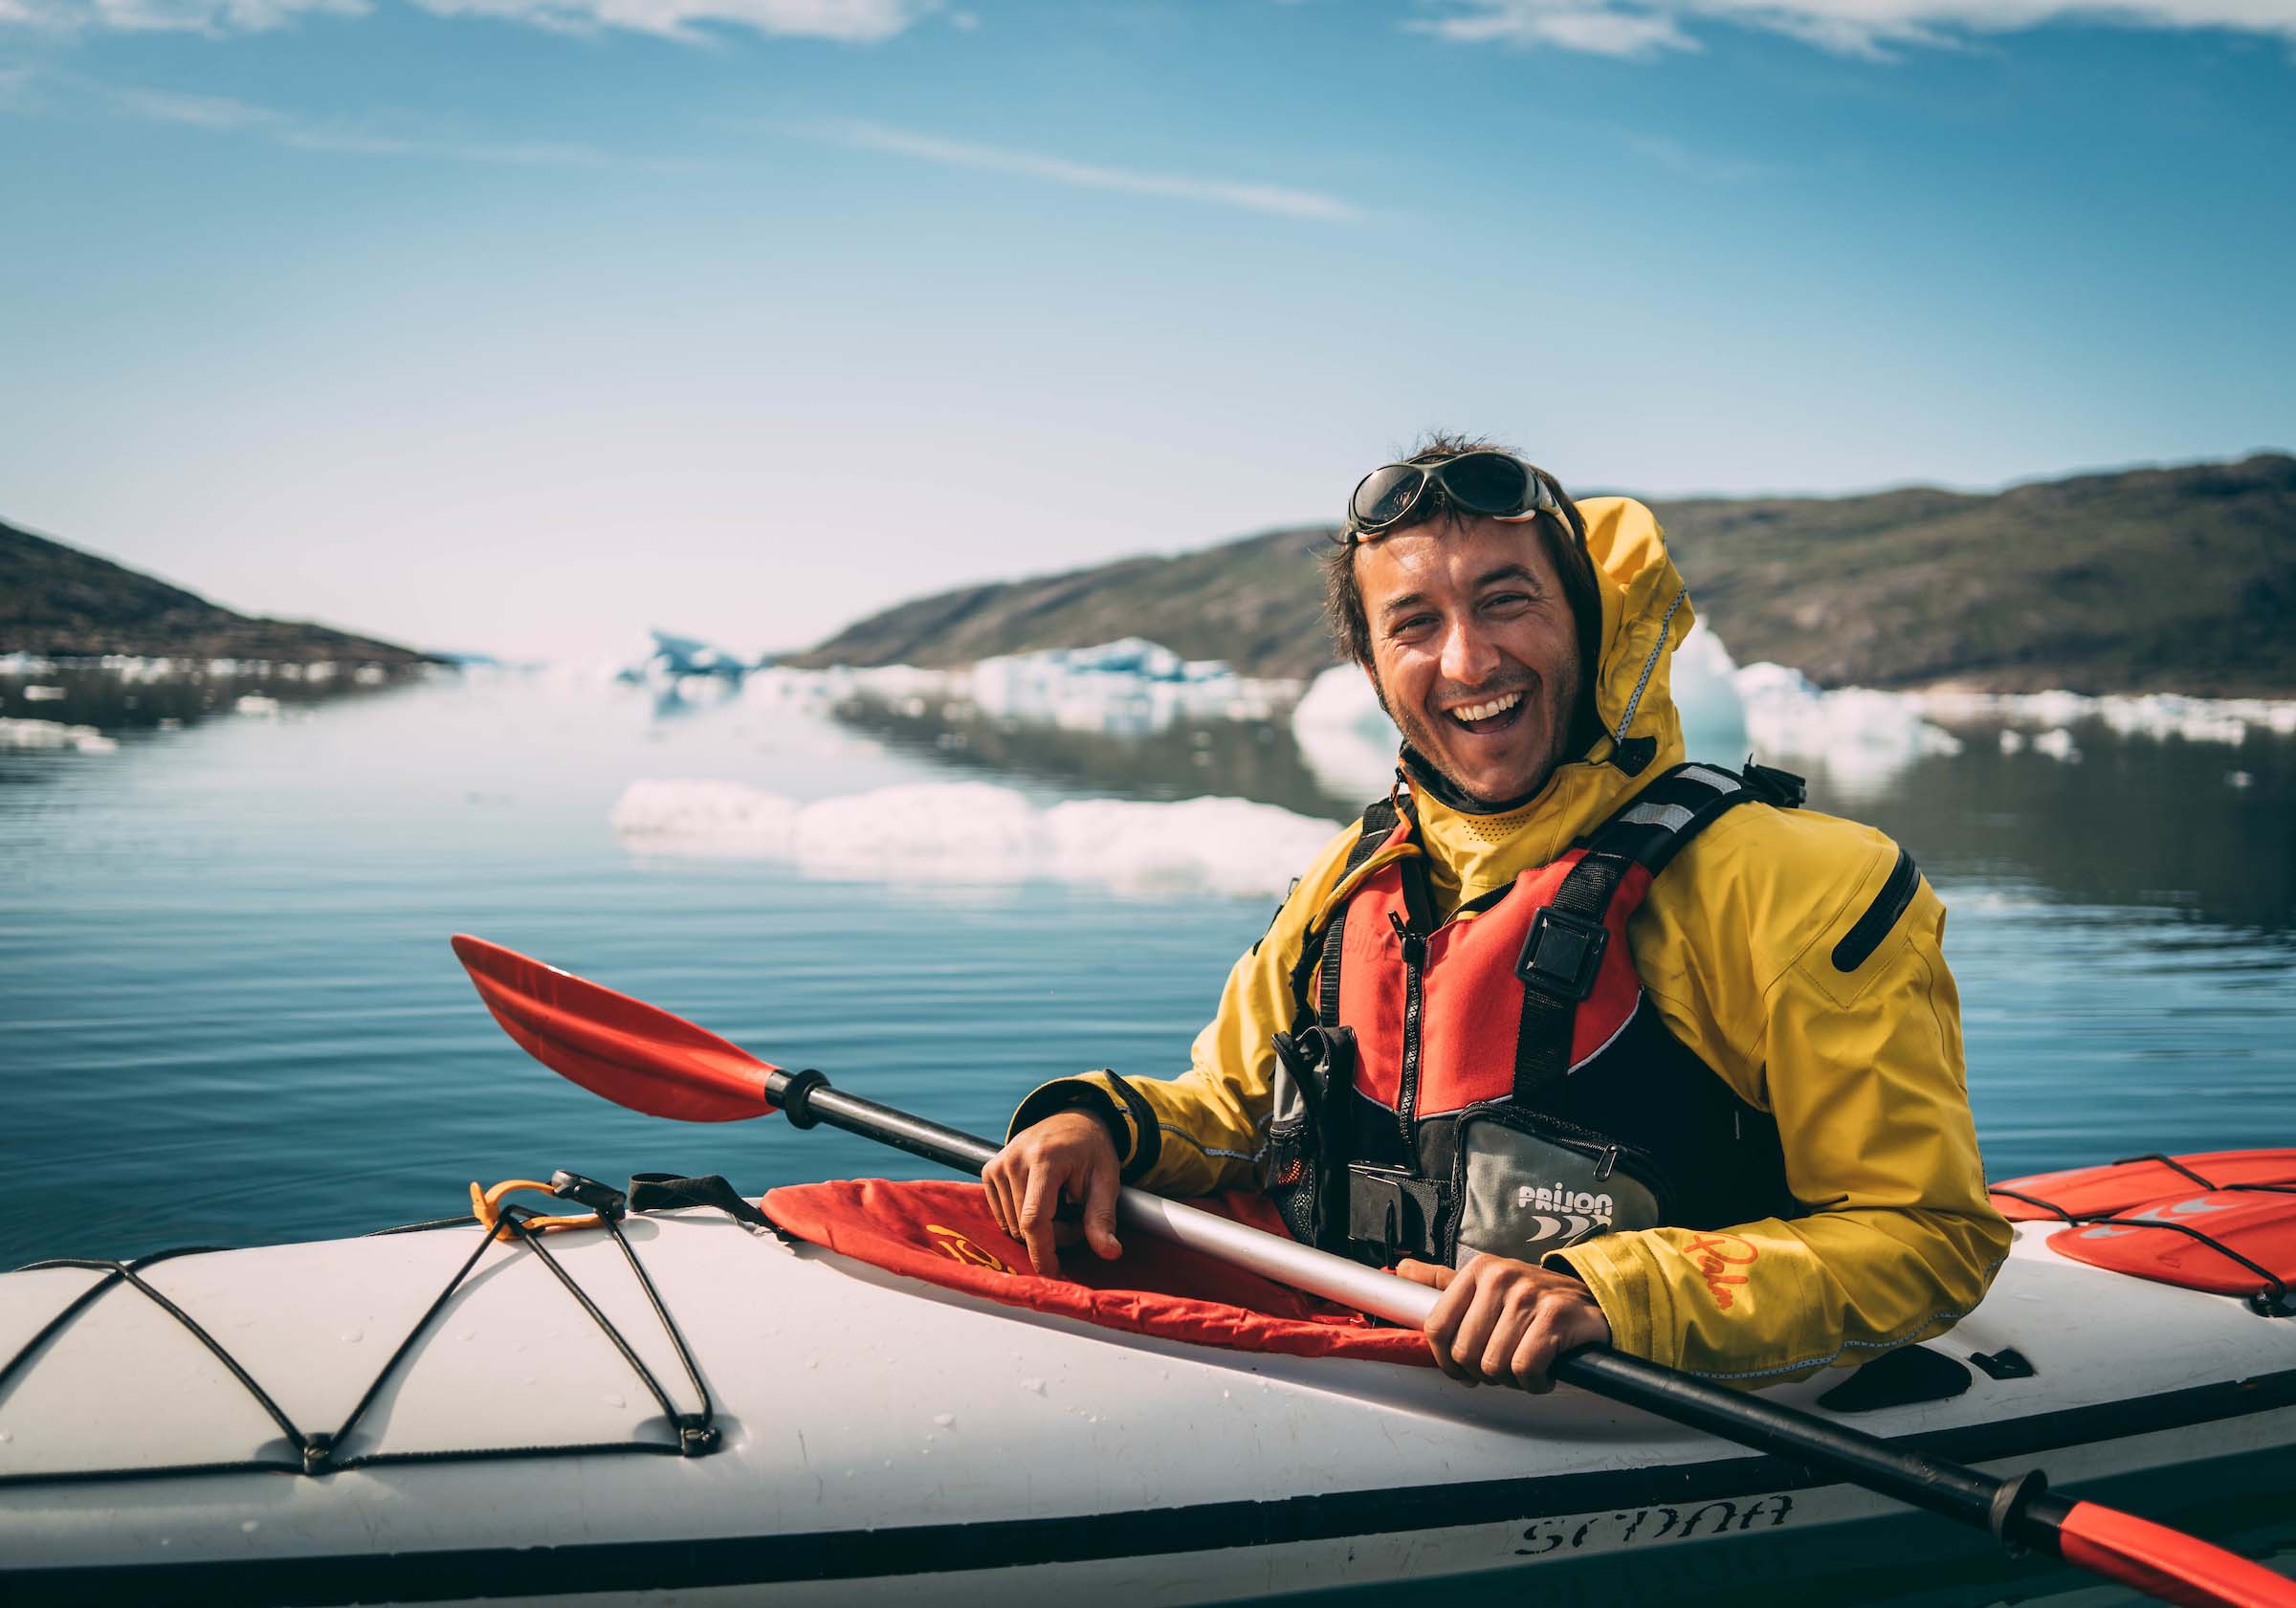 Smiling man on kayak. Photo - Jorgo Kokkinidis, Visit Greenland